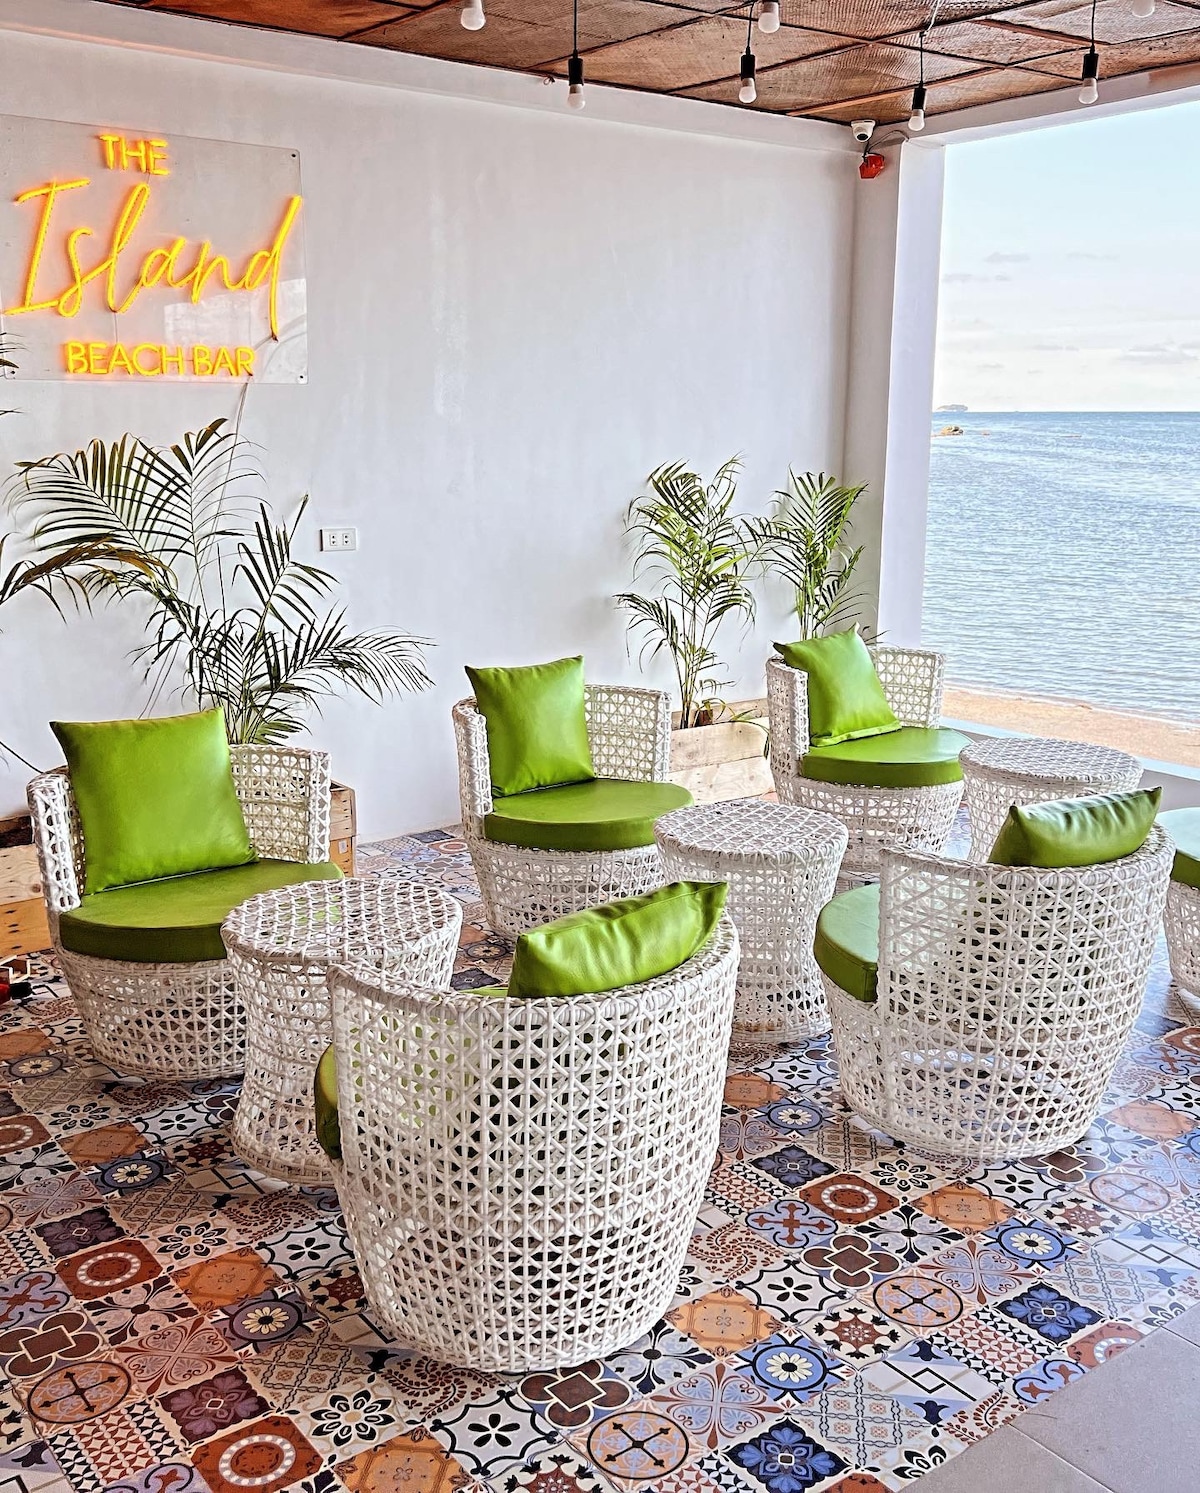 Island Beach Bar and Resort